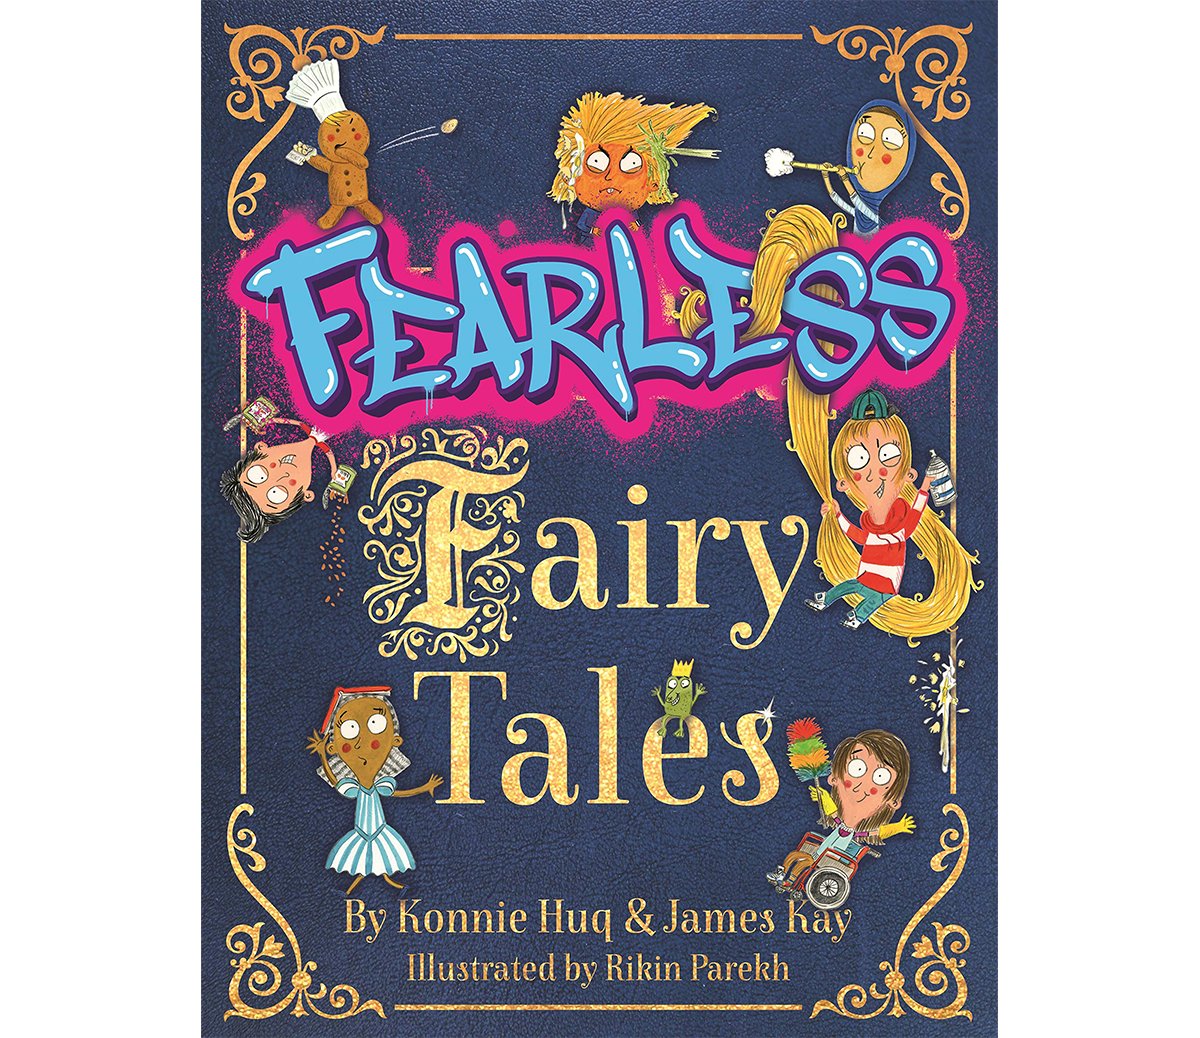 rikin-parekh-fearless-fairy-tales-cover-illustration.jpg